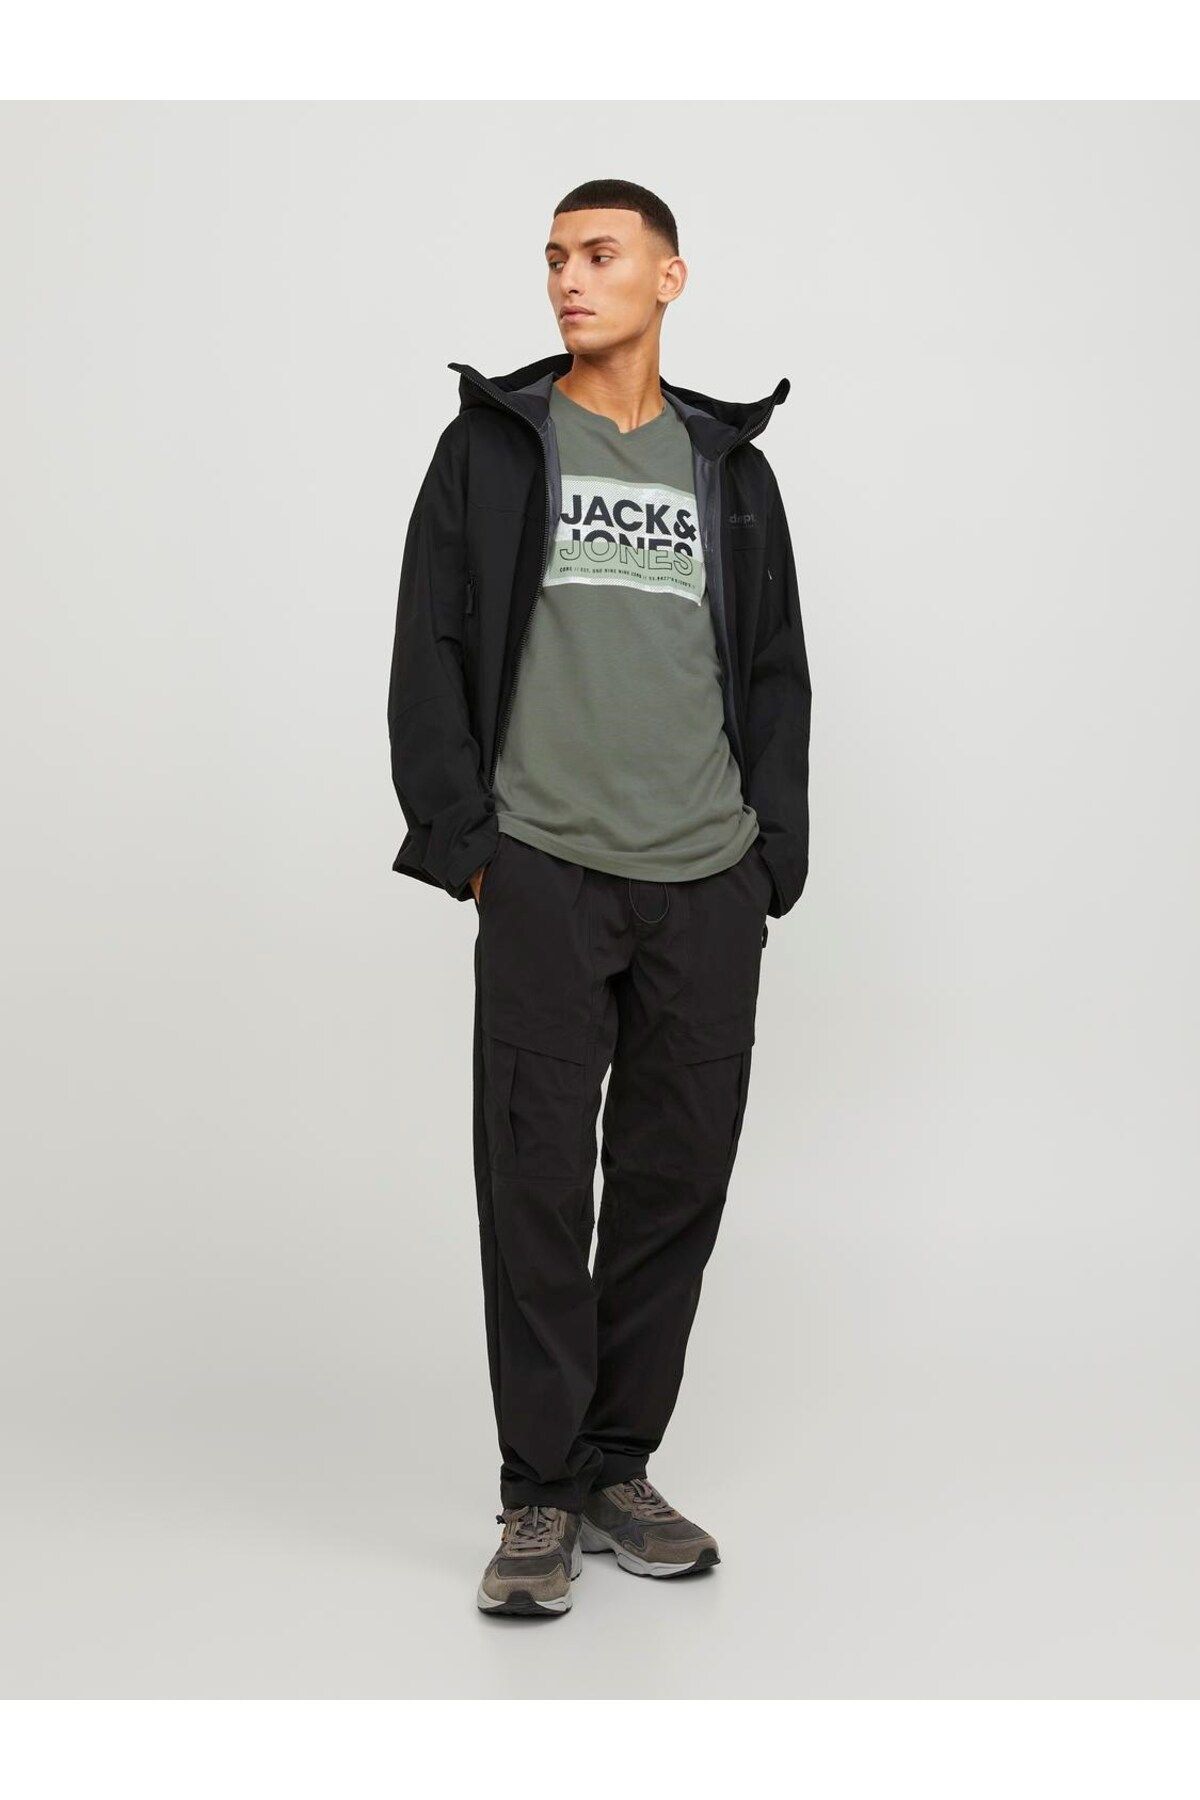 Jack & Jones Jack & Jones تی شرت مردانه سبز یقه او جک اند جونز